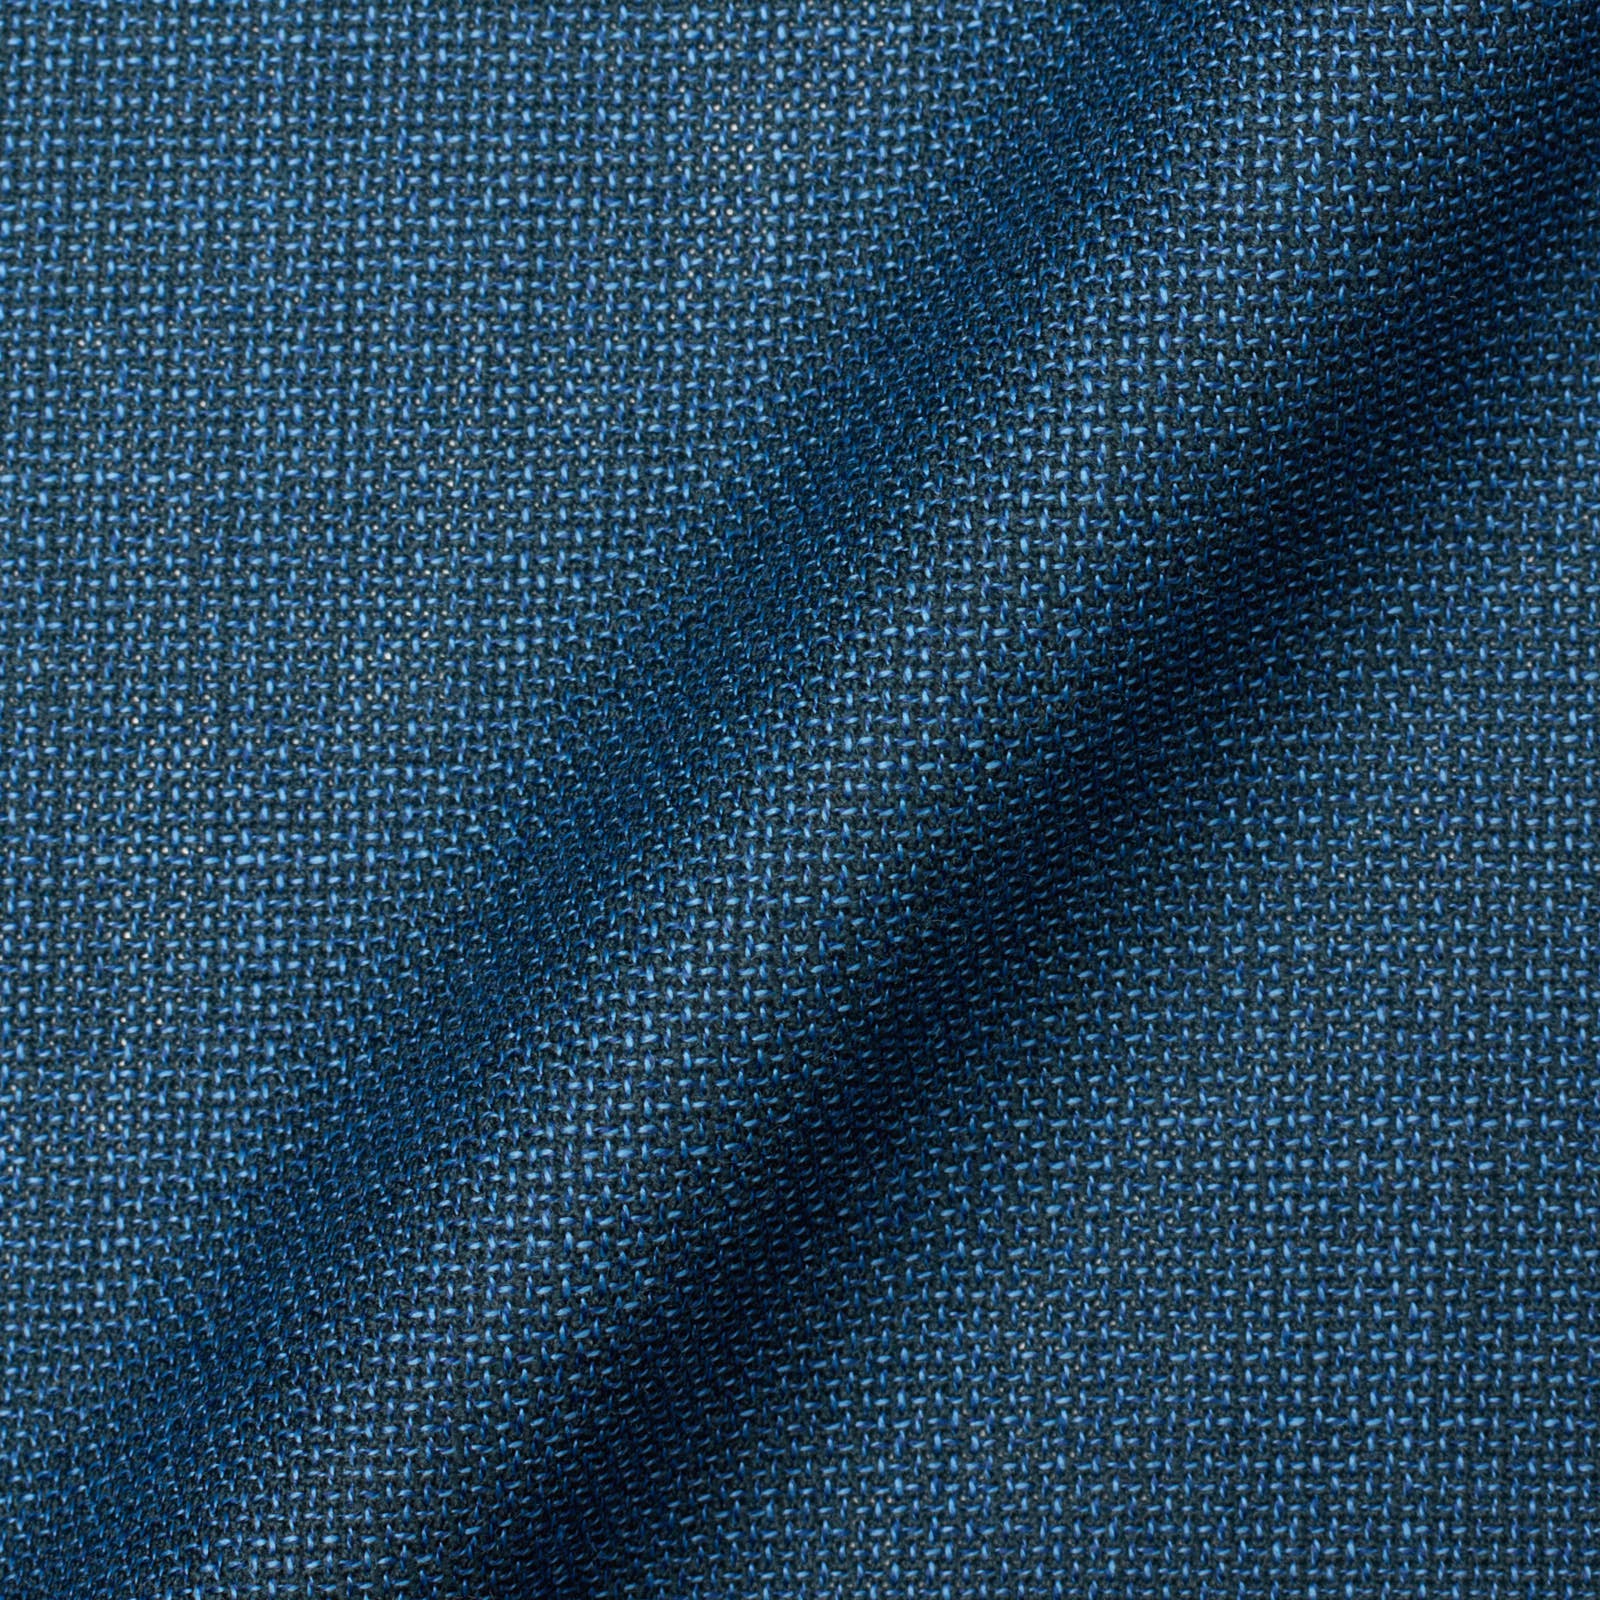 PAL ZILERI Blue Wool French Lined Jacket Blazer EU 54 NEW US 44